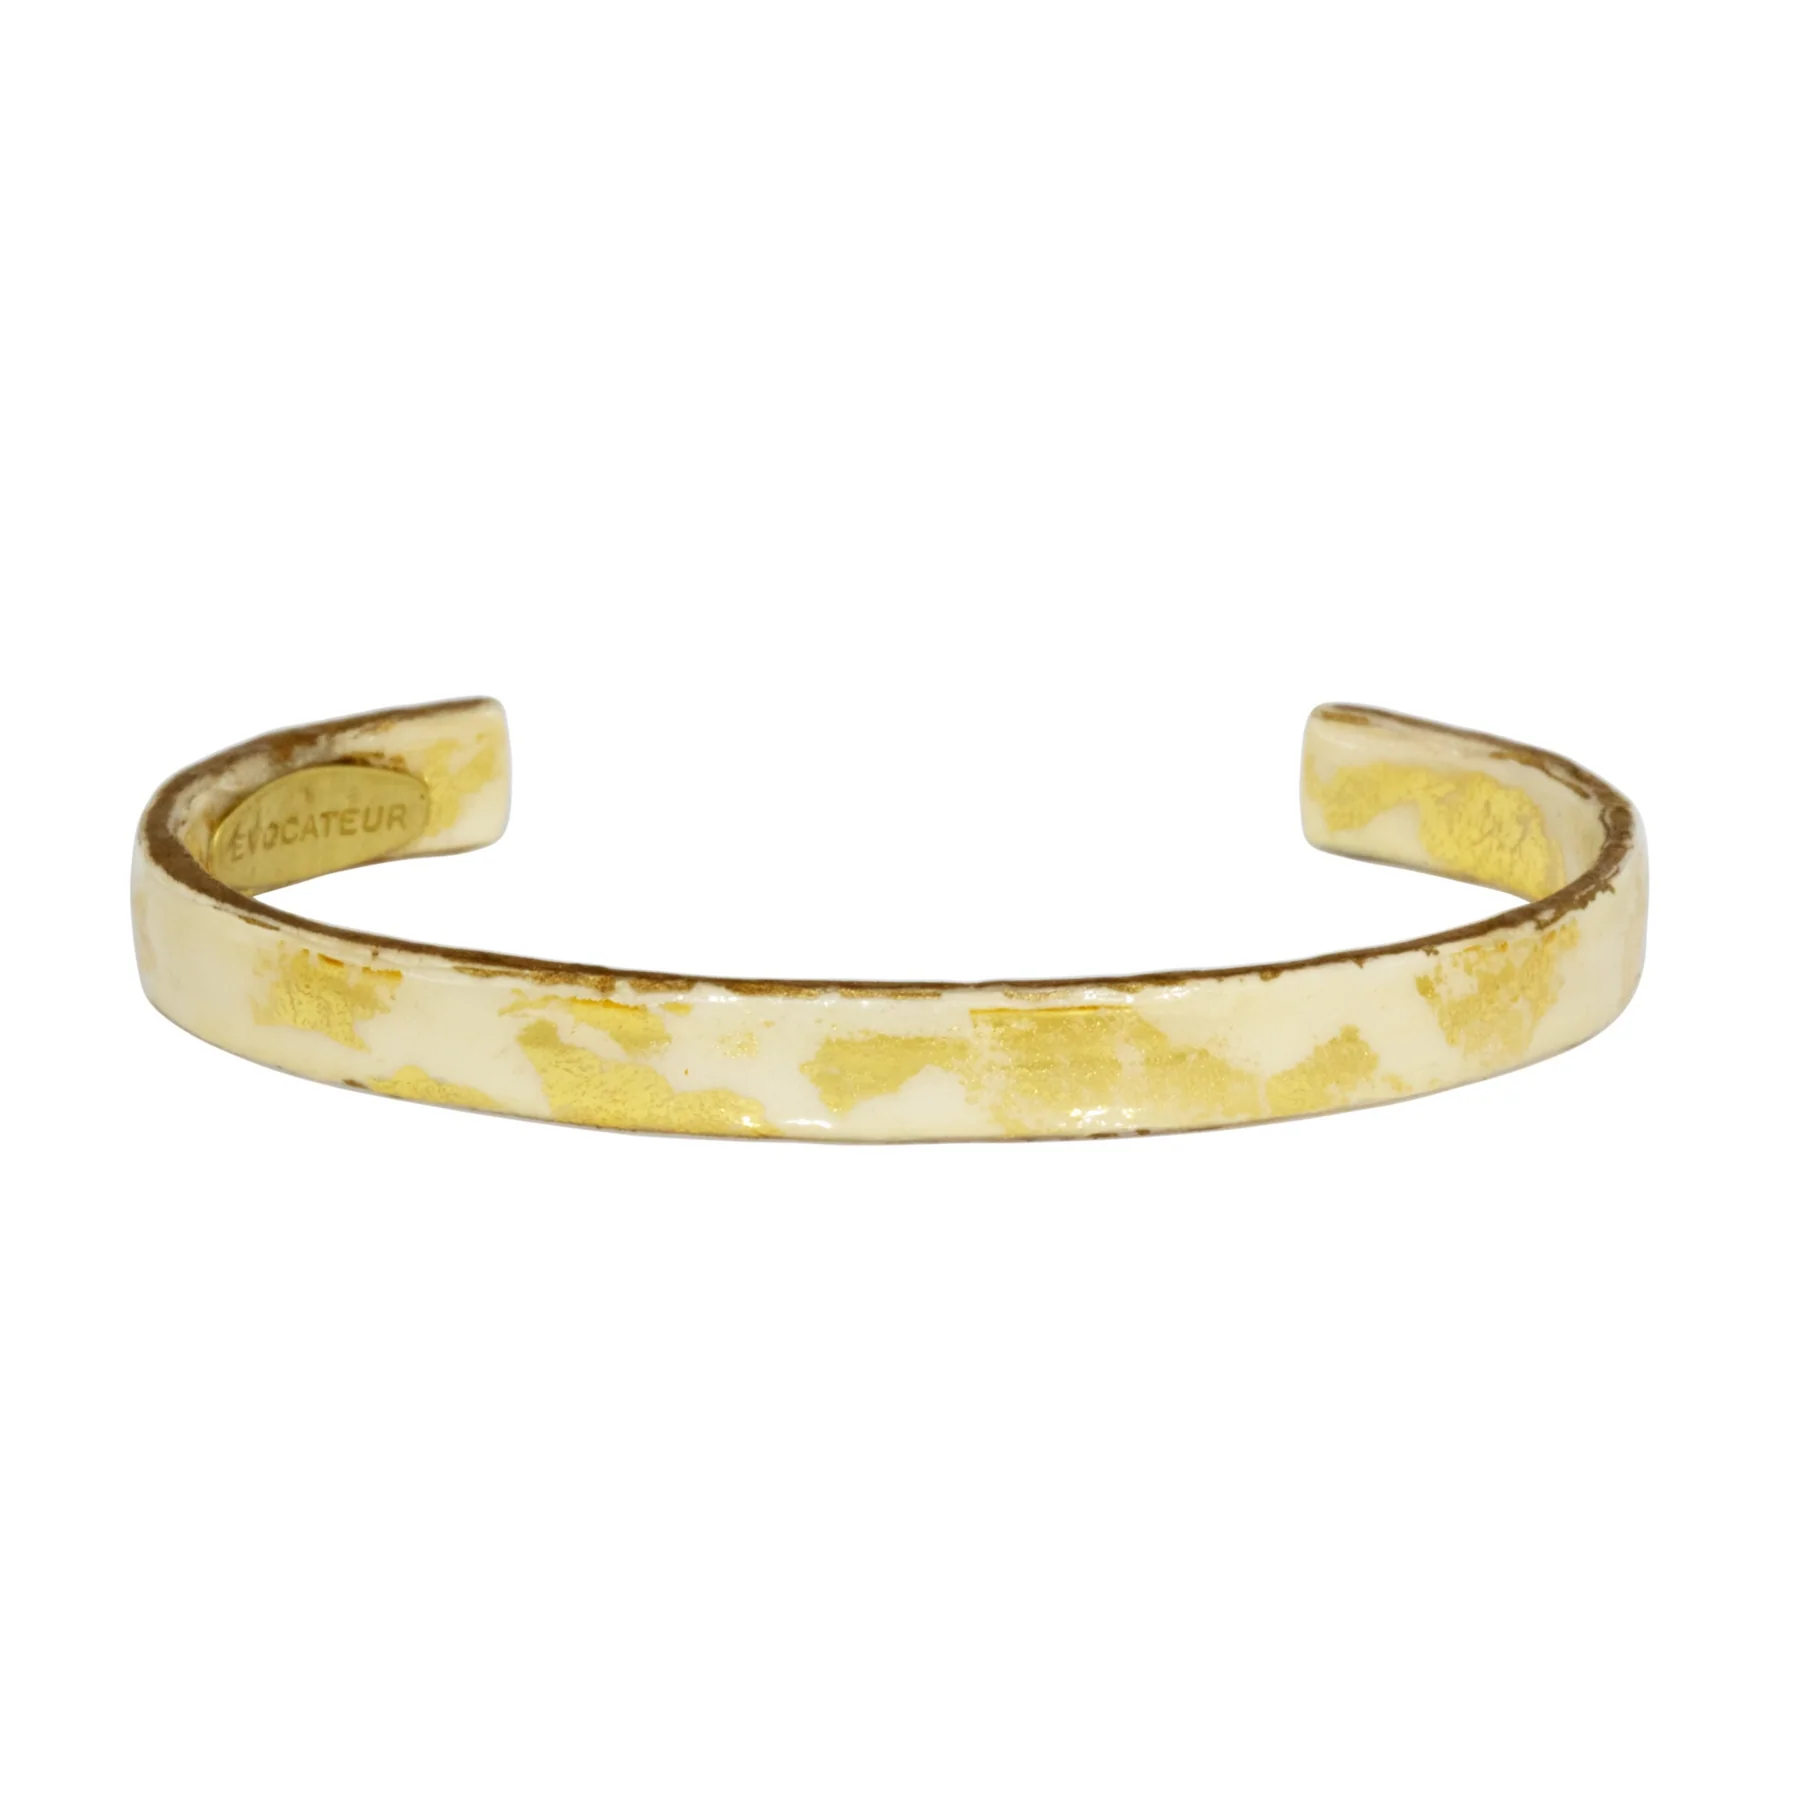 22k Gold Leaf & Enamel Zebra Profile Cuff Bracelet by Evocateur